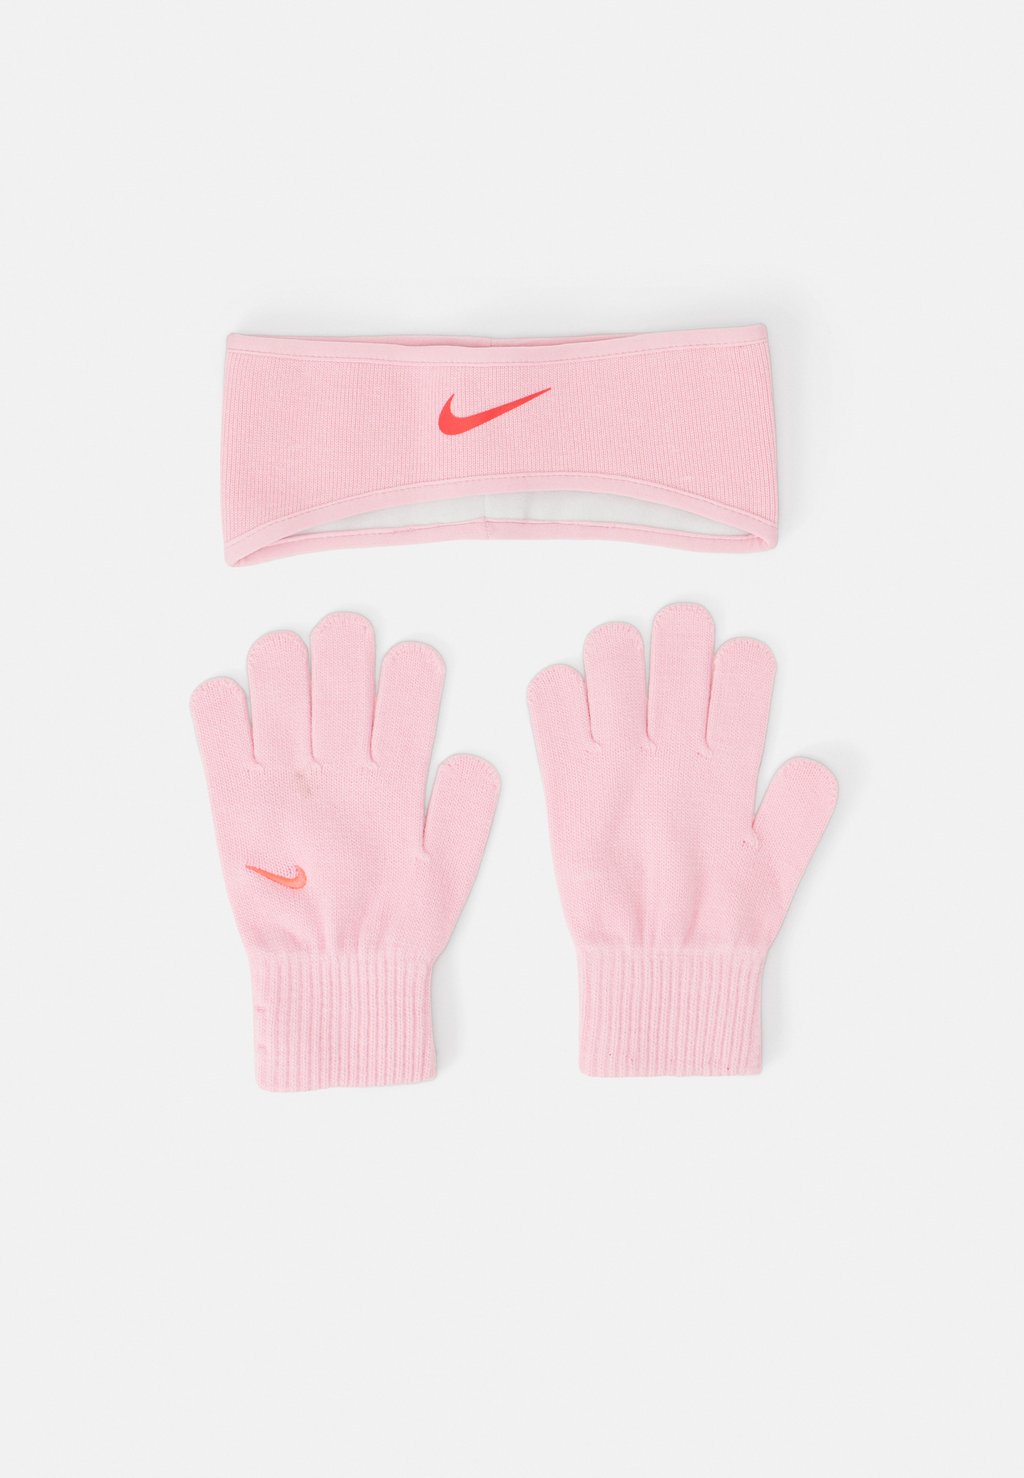 Перчатки Gloves Headband Set Unisex Nike, цвет soft pink